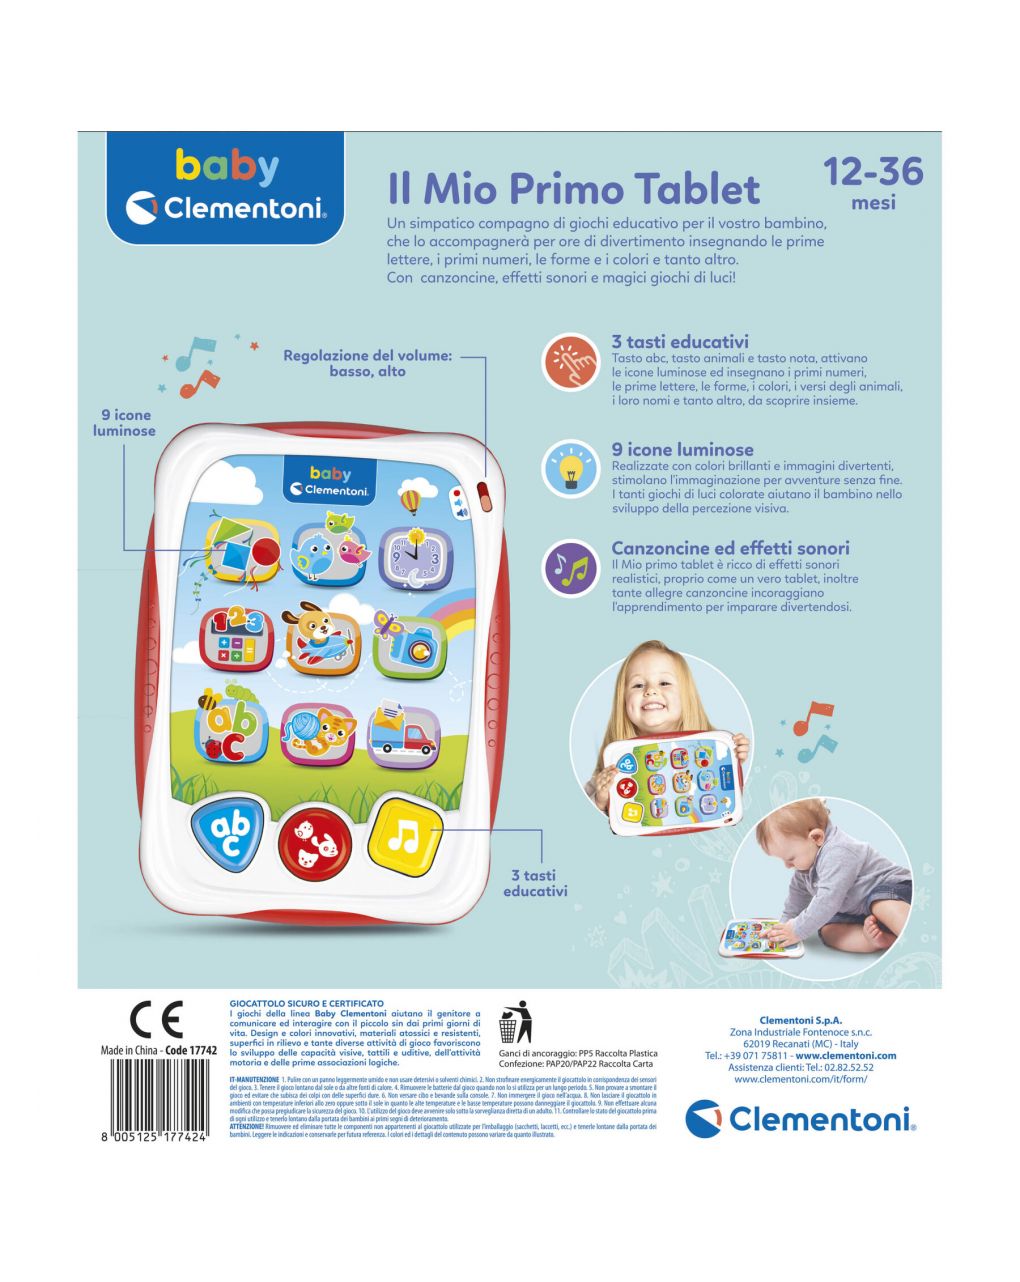 Baby clementoni - il mio primo tablet, educativo parlante - Baby Clementoni